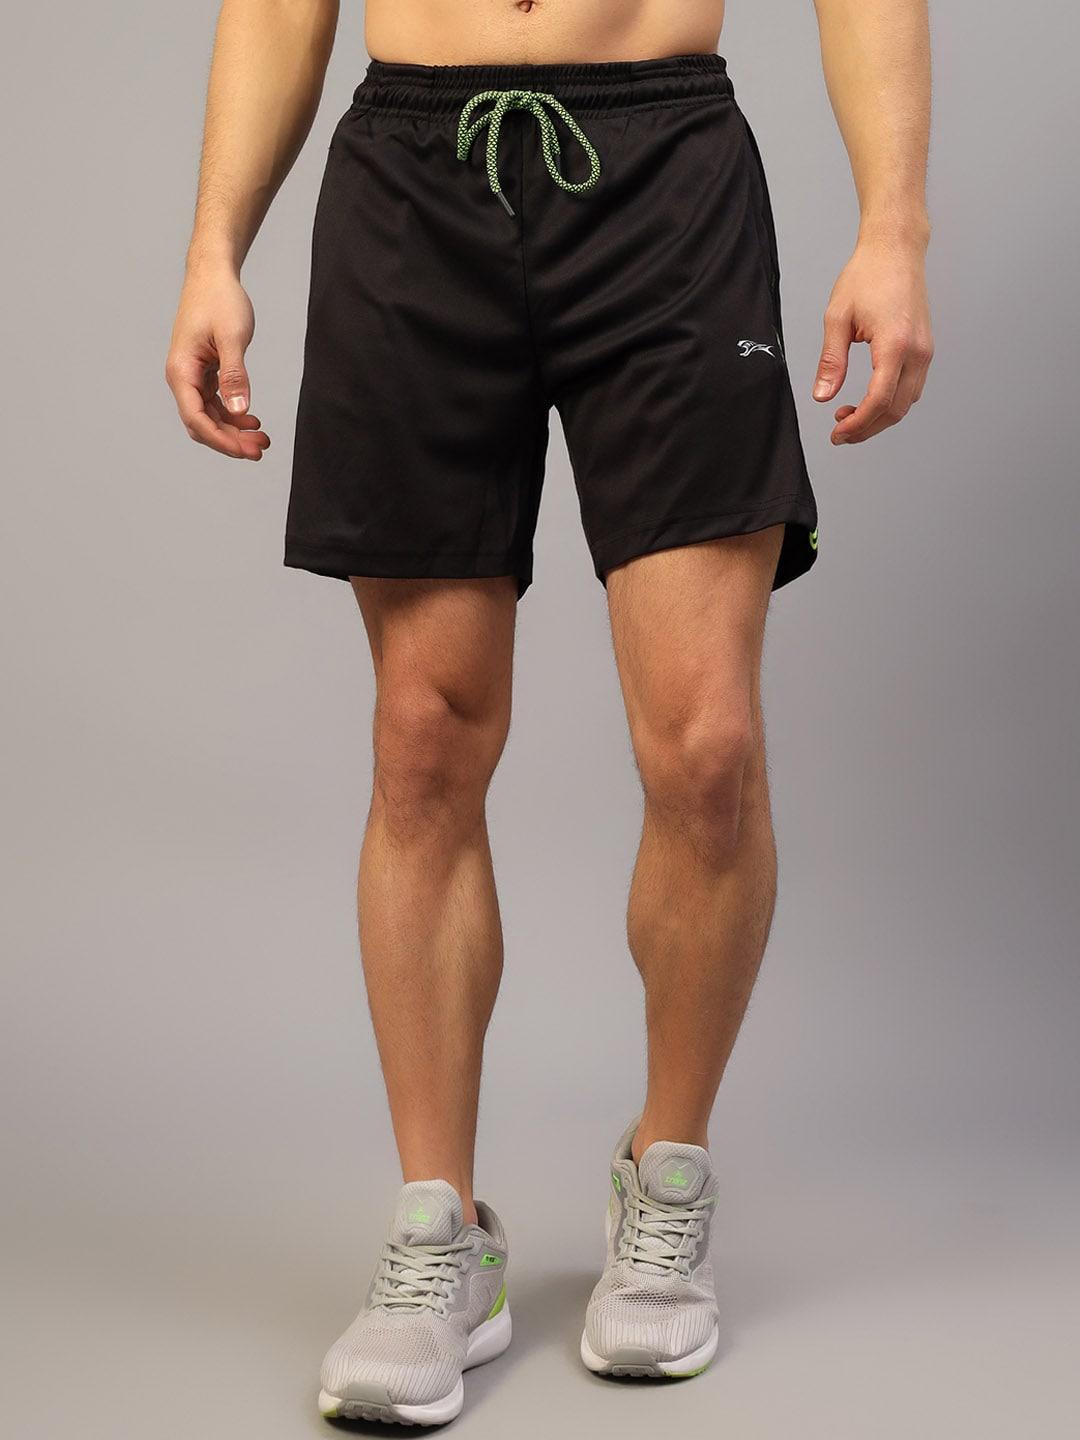 shiv-naresh-men-sports-shorts